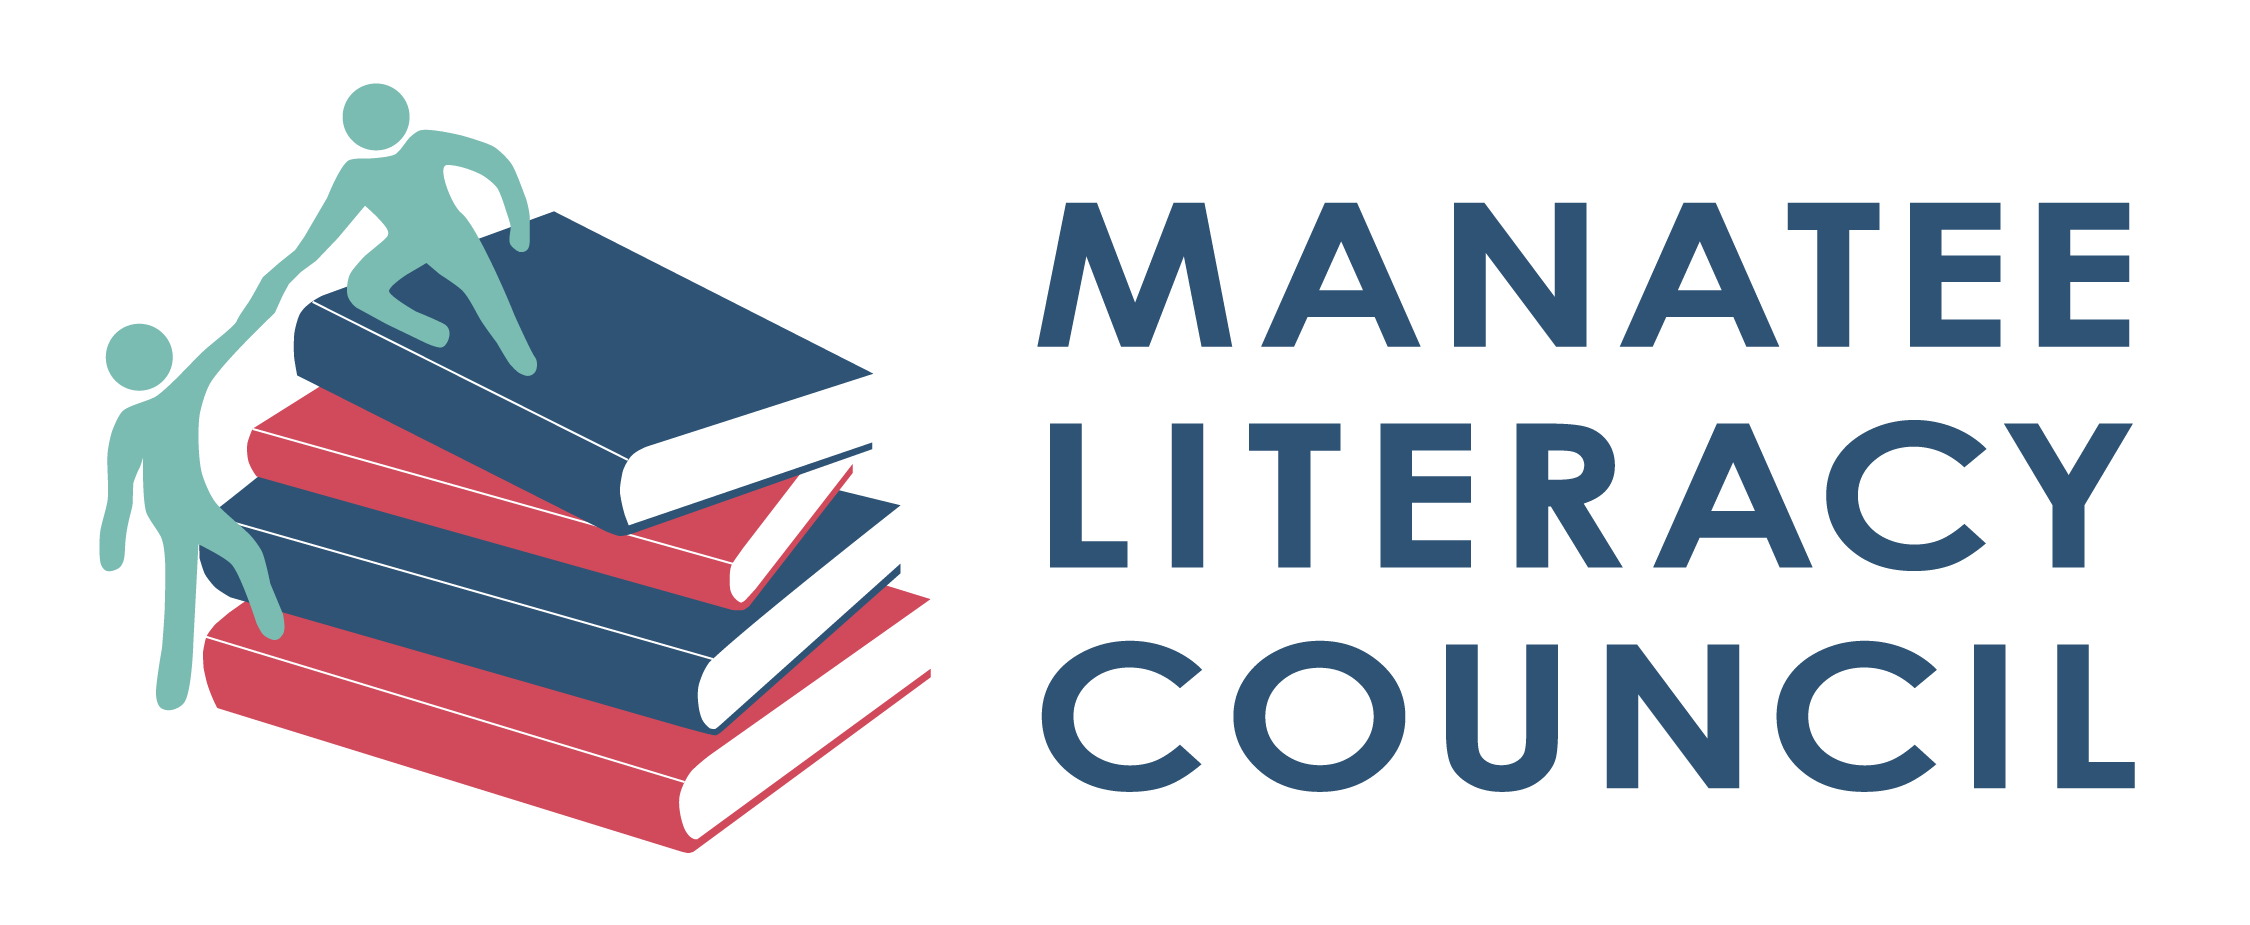 Manatee Literacy Council logo